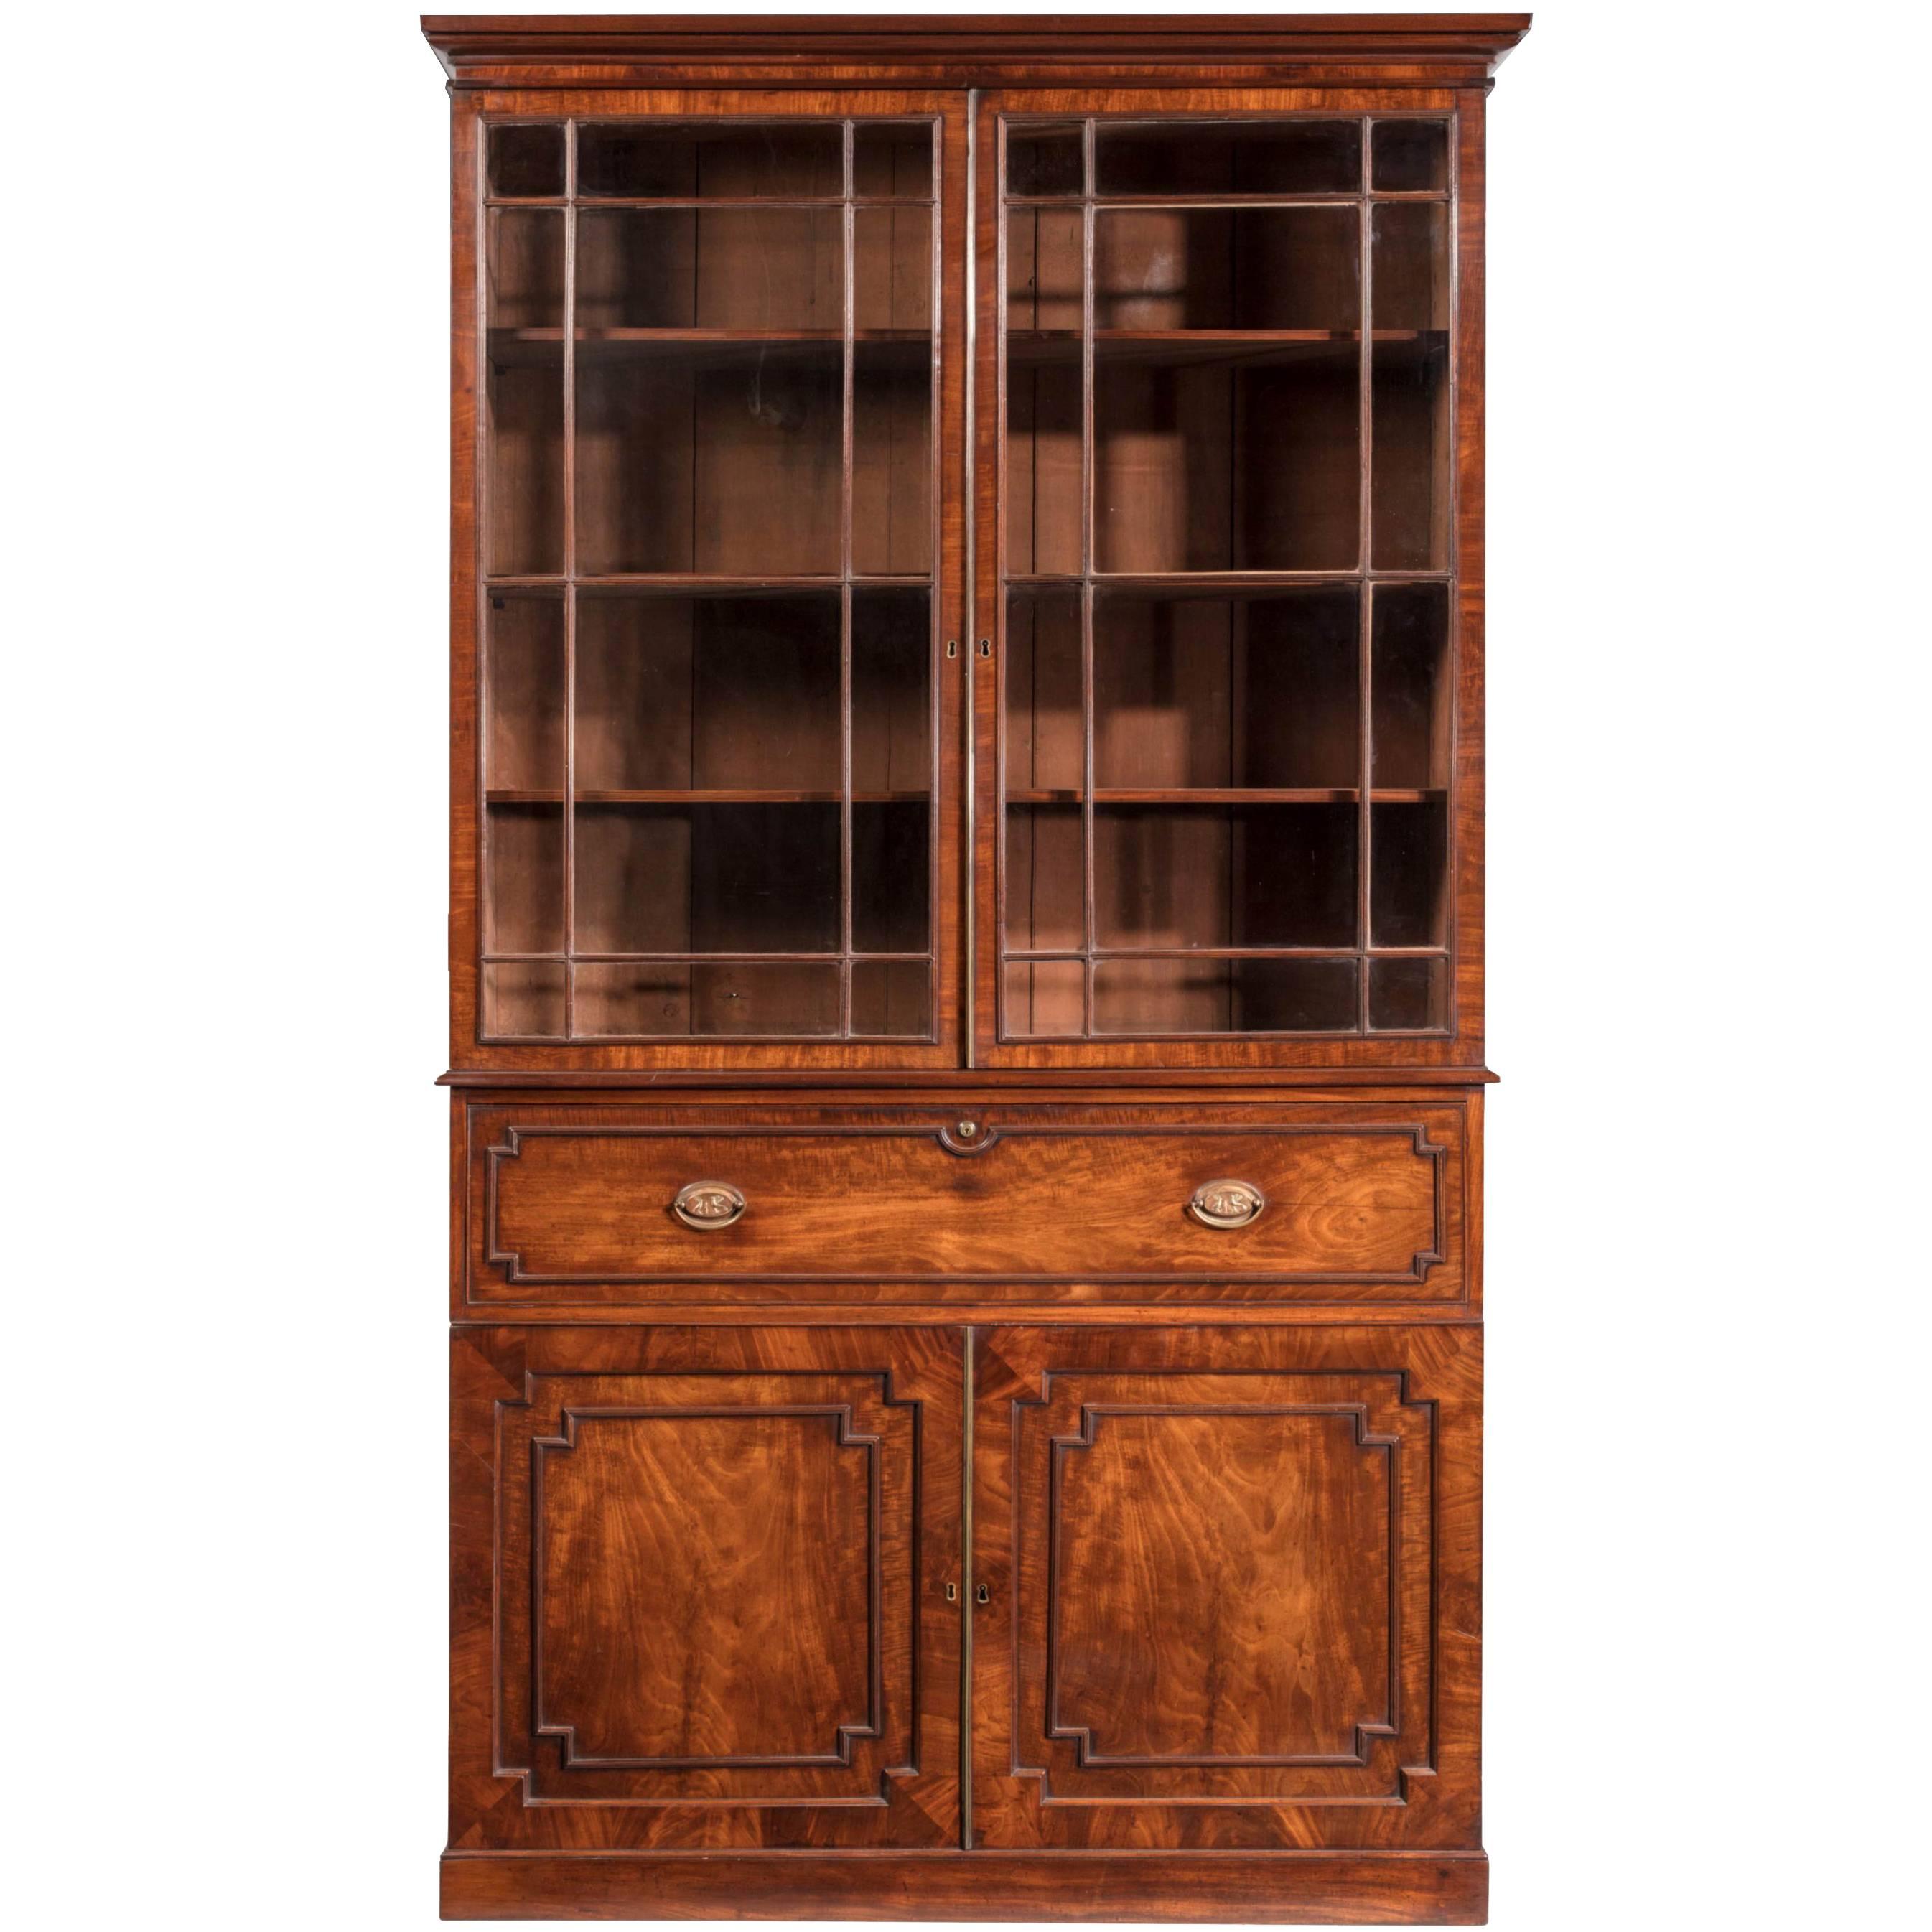 George III Period Estate Secretaire Bookcase